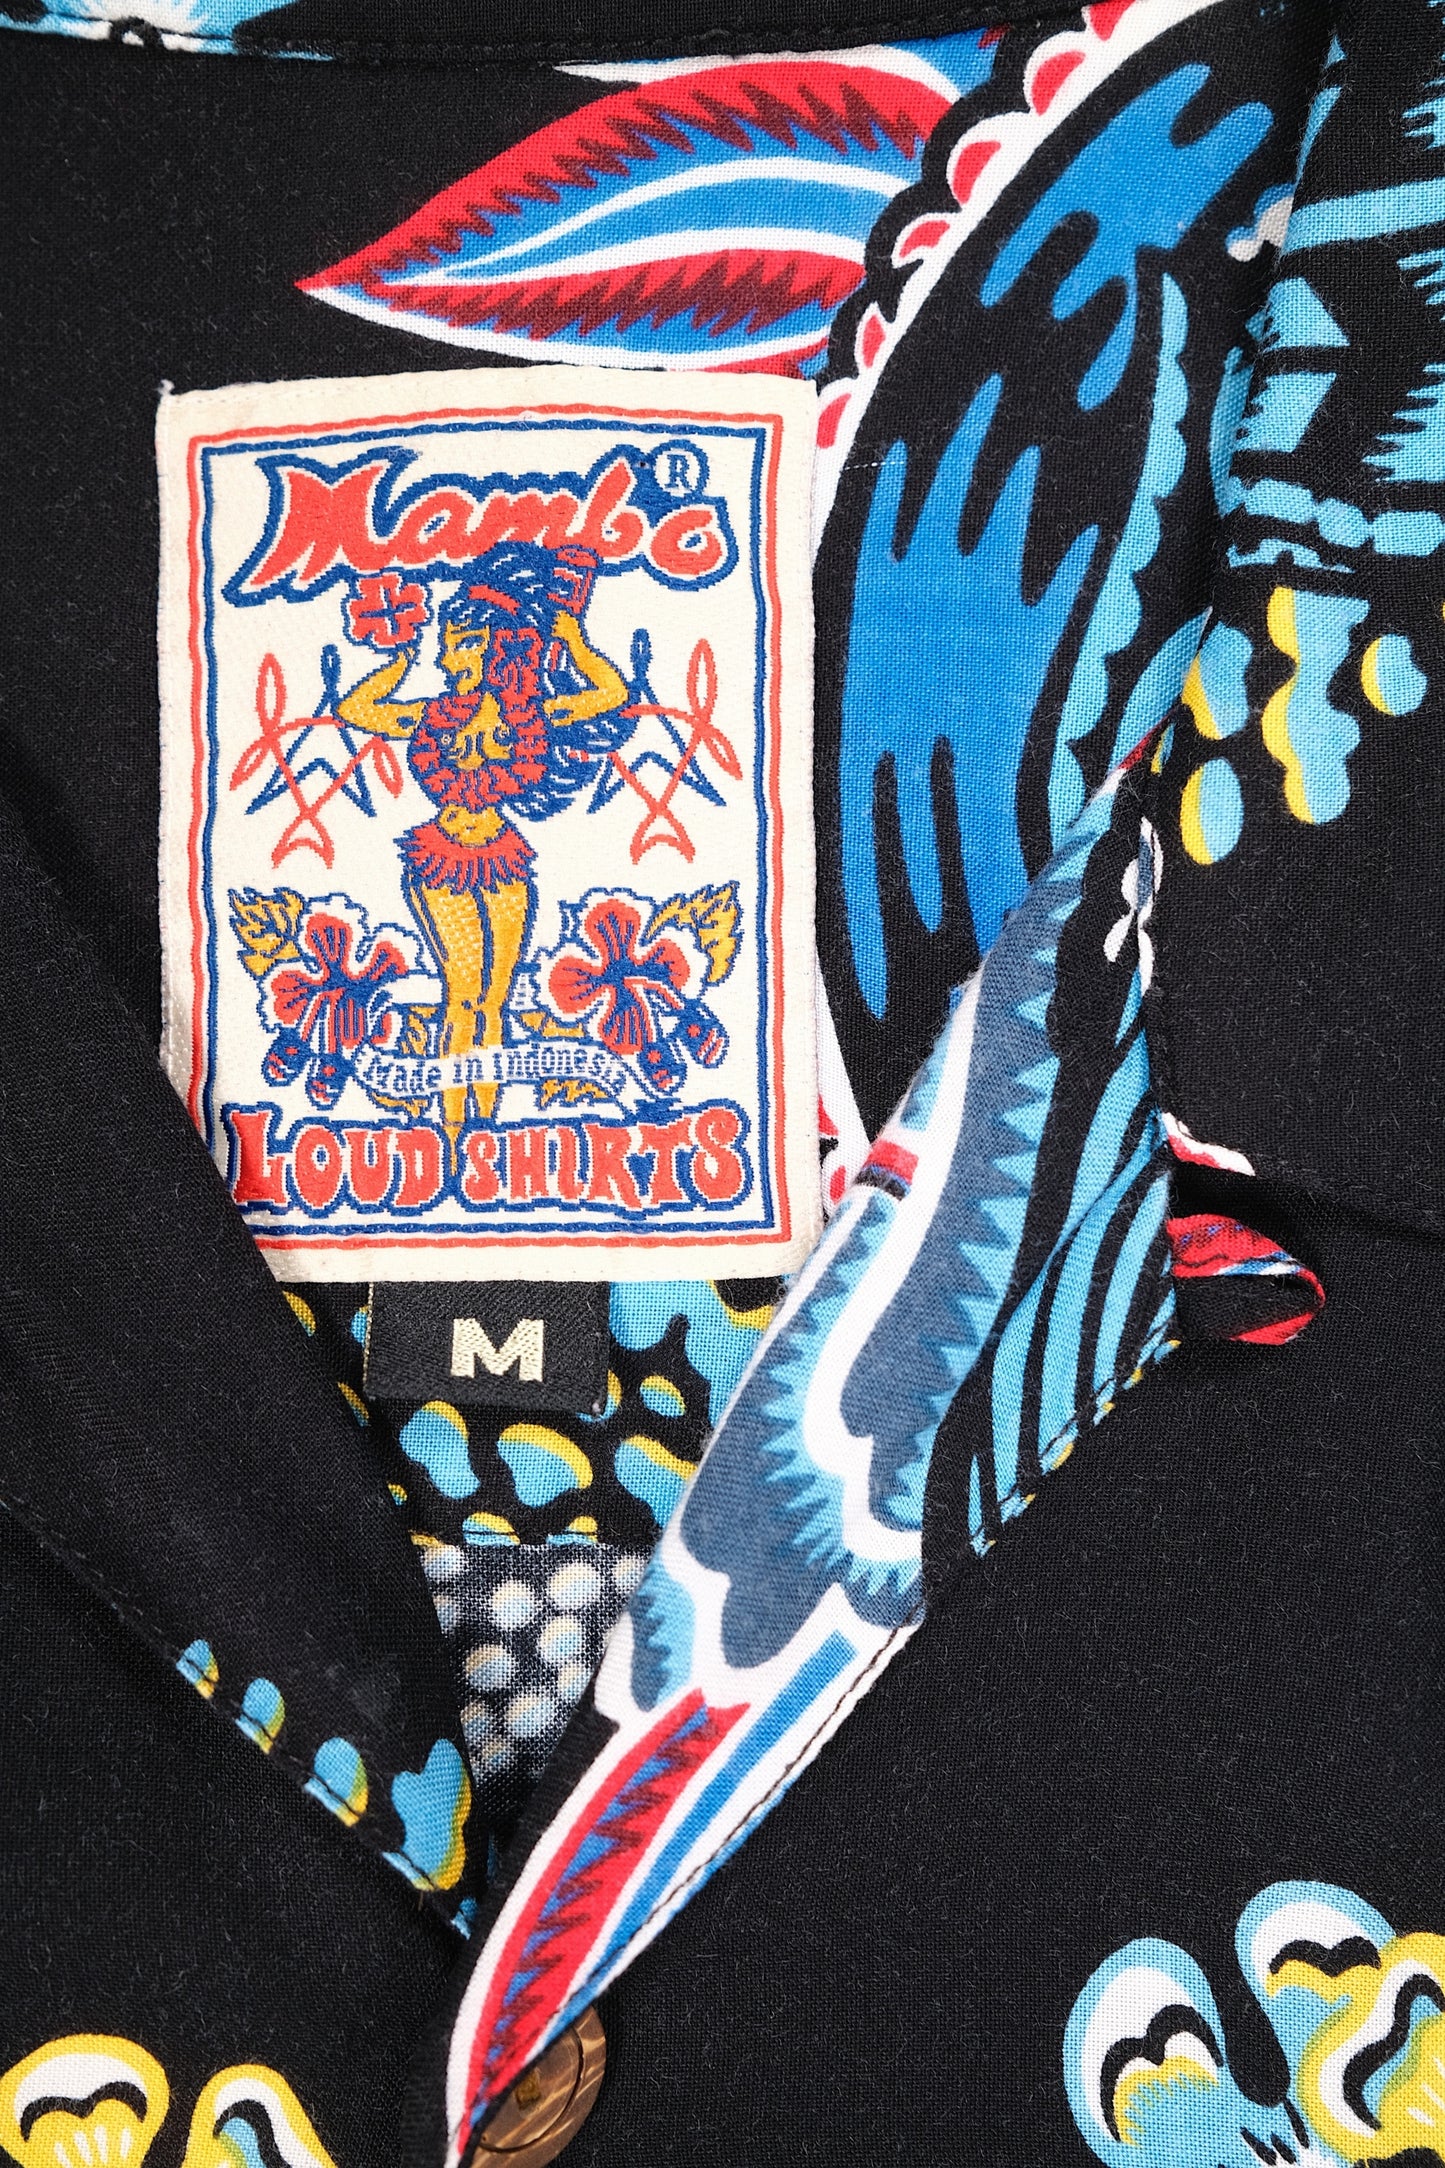 Jim Mitchell "Black Tiki" Vintage Mambo Loud Shirt 101